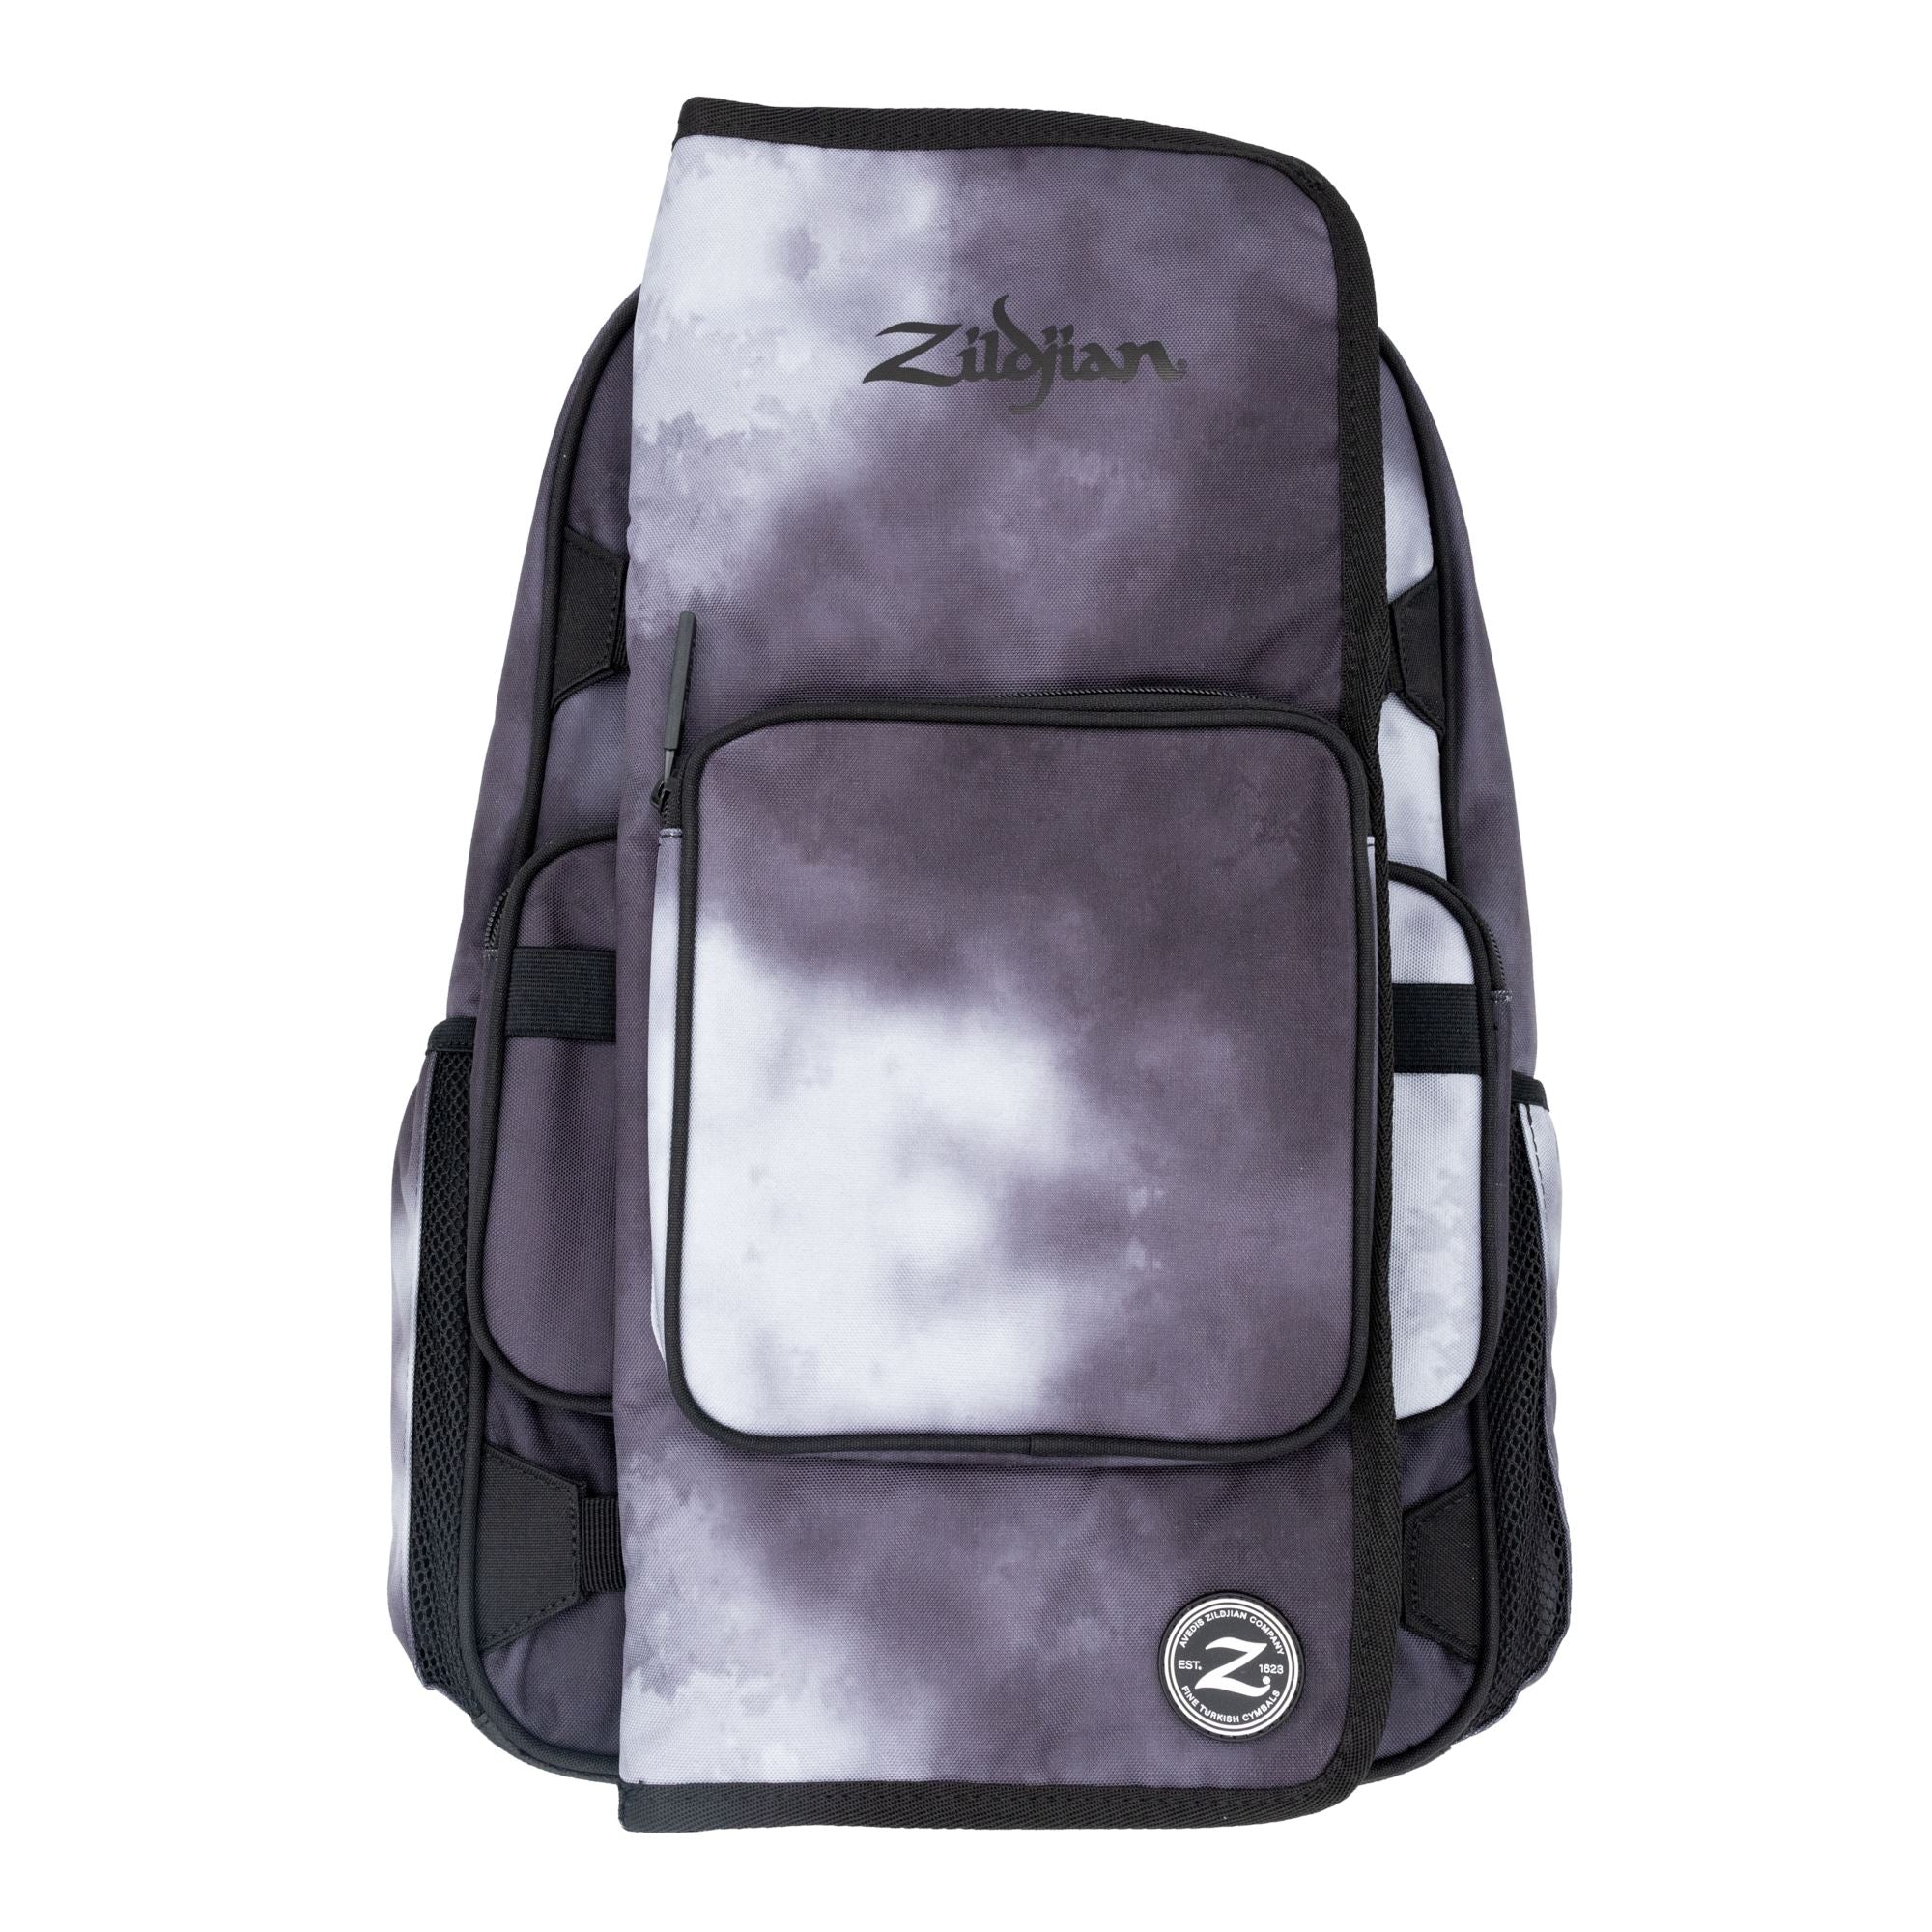 Zildjian Student Backpack - Blk/Rcl (ZXBP00102) NEW CASES Zildjian 